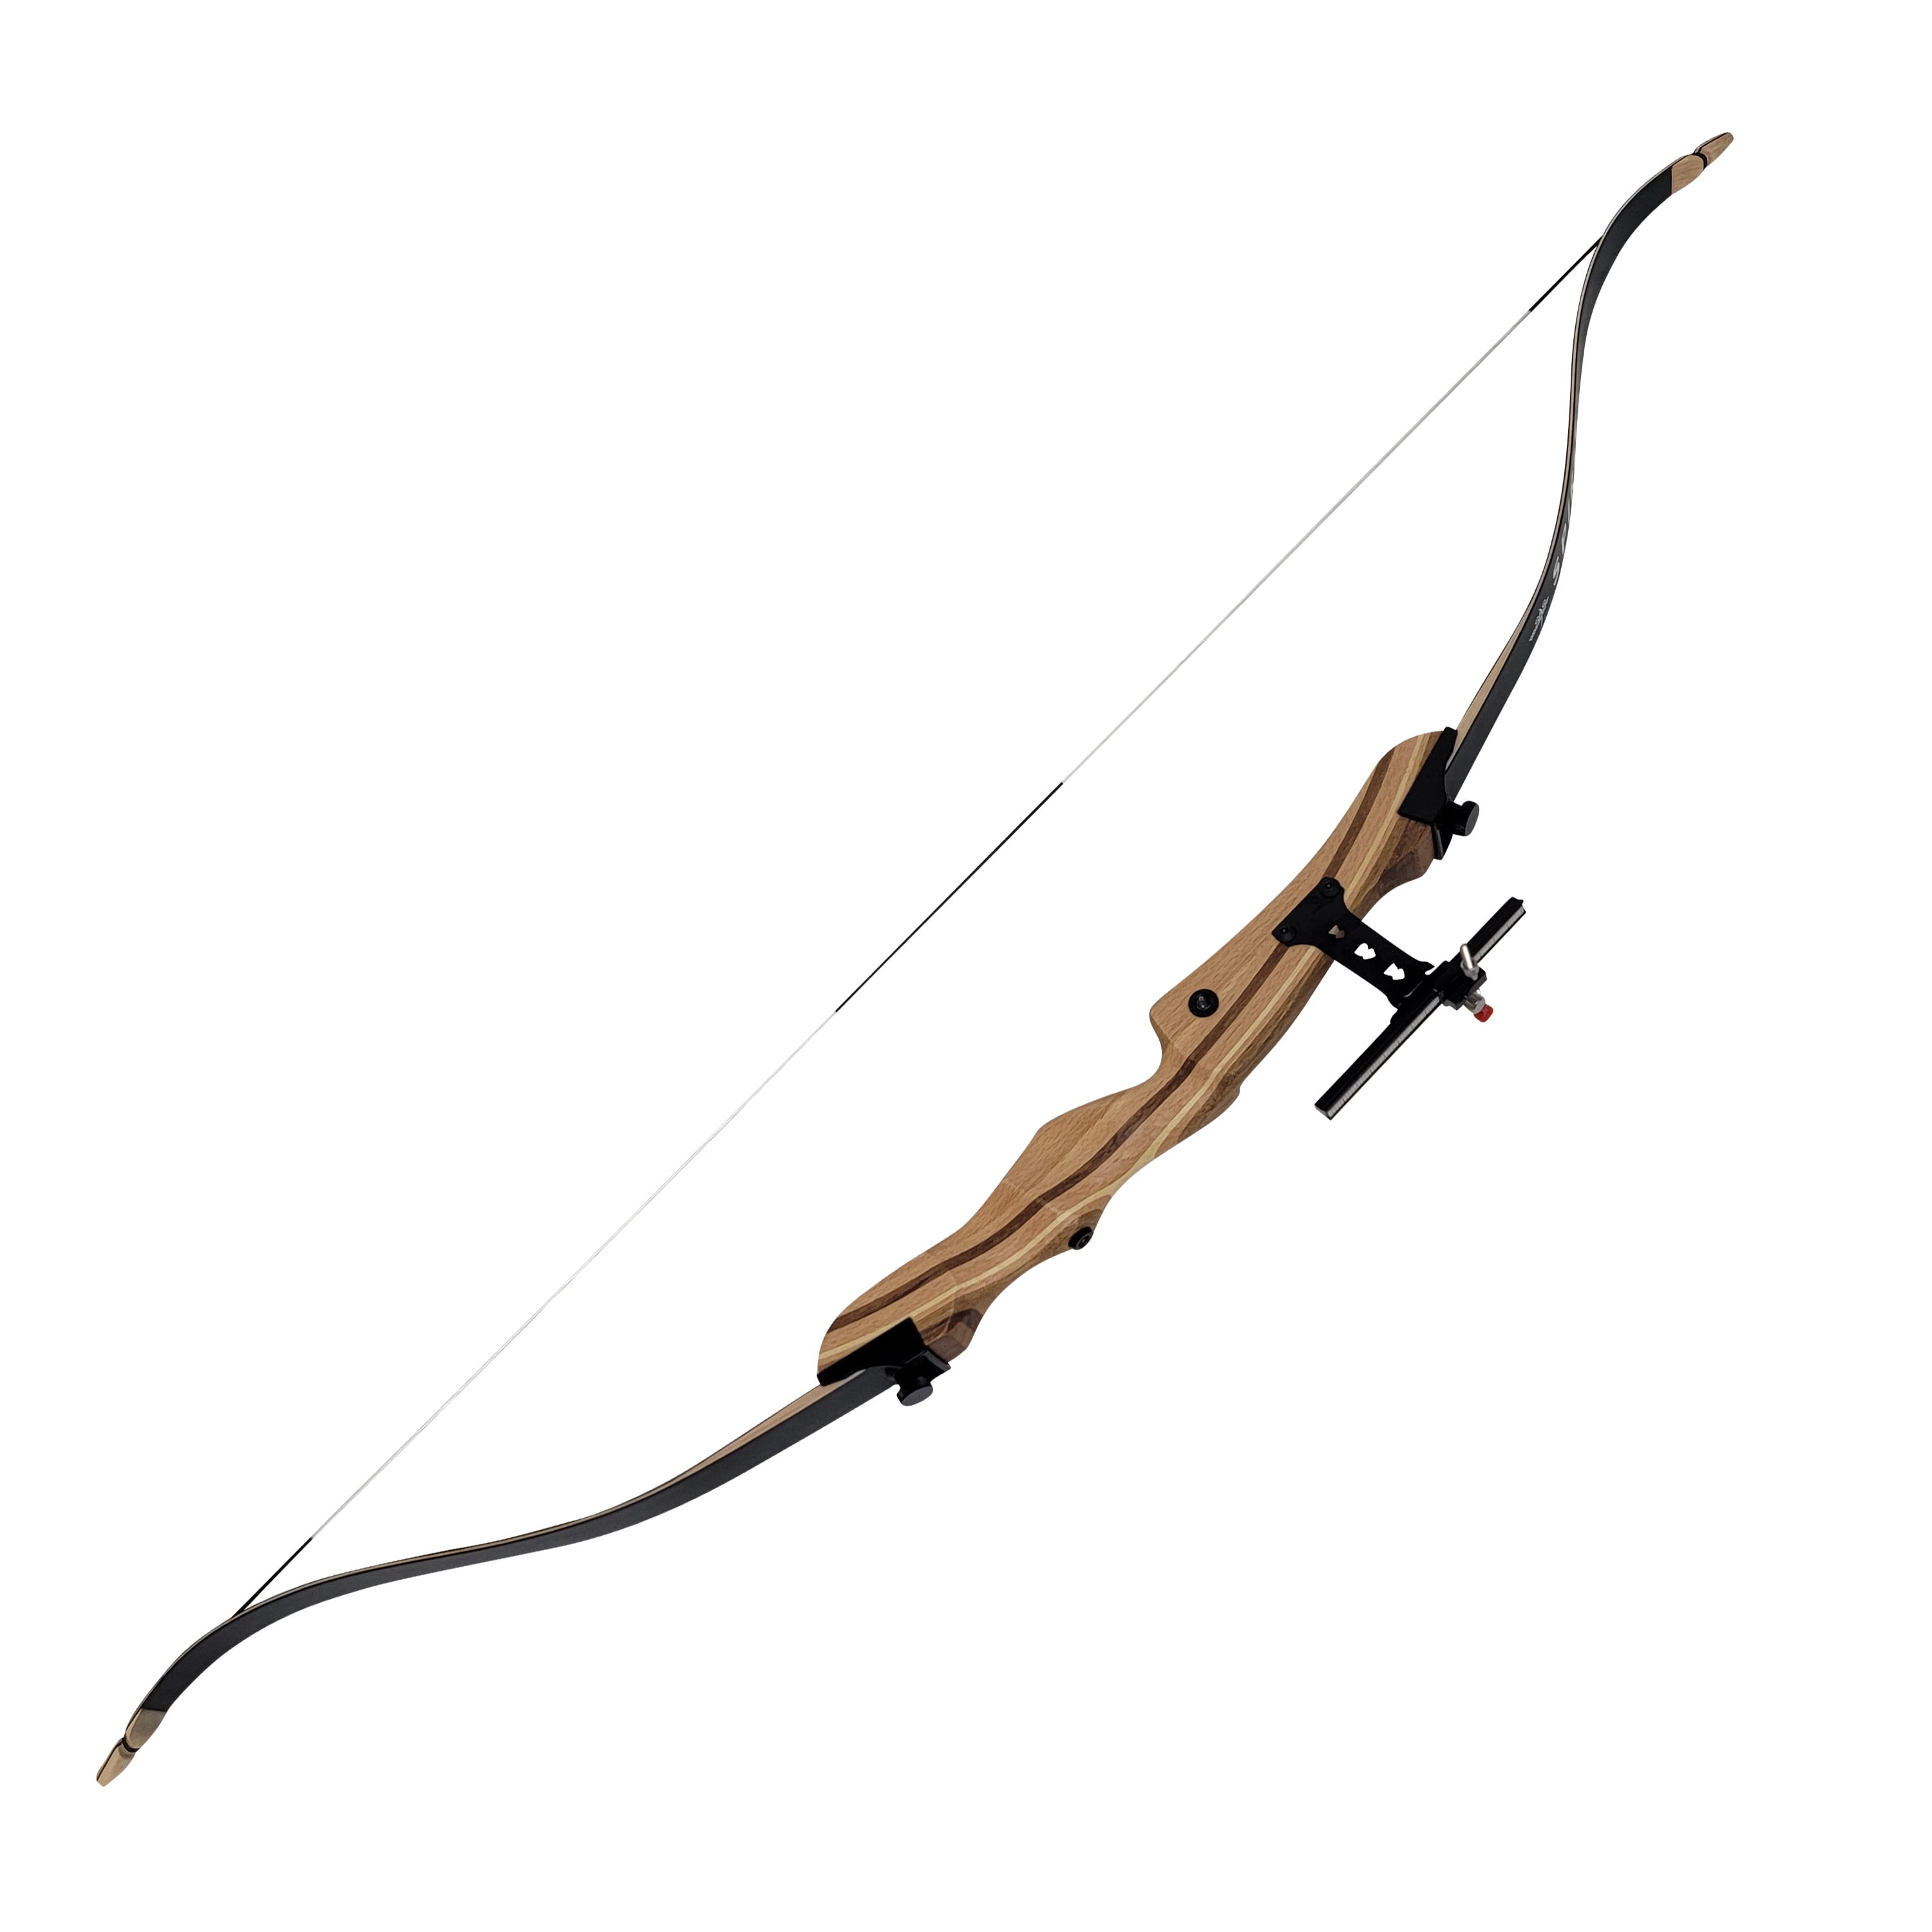 SAS Spirit Jr 54 Beginner Youth Wooden Archery Bow